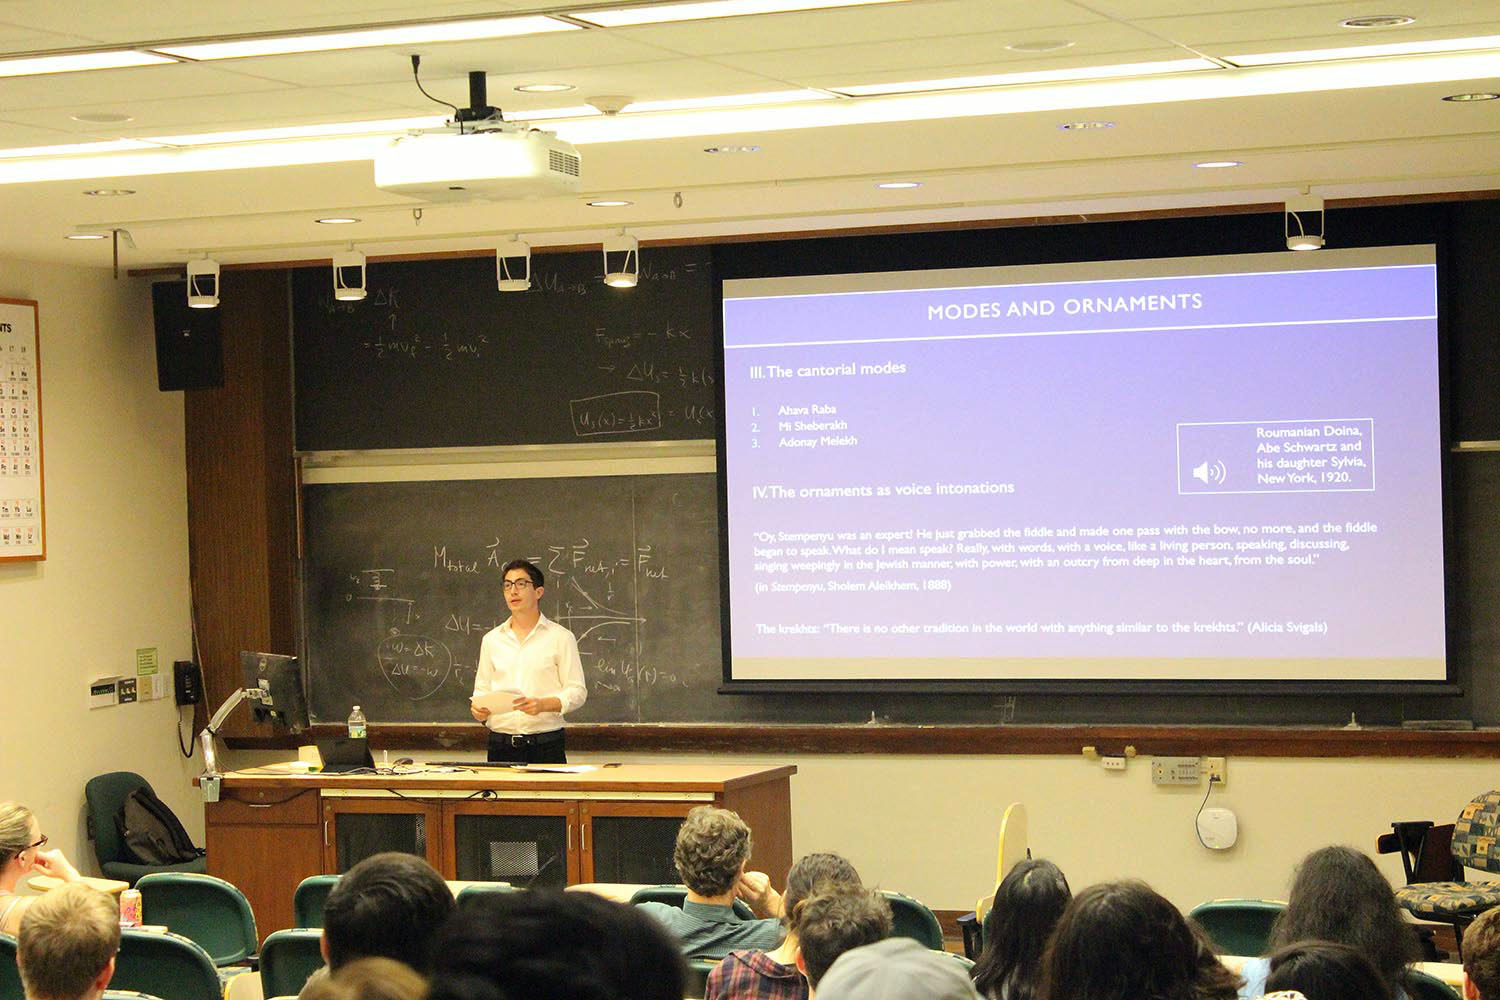 On Oct 10, Douglas Kiman, a second year PhD student in ethnomusicology, presented a Graduate Speaker Series talk titled 